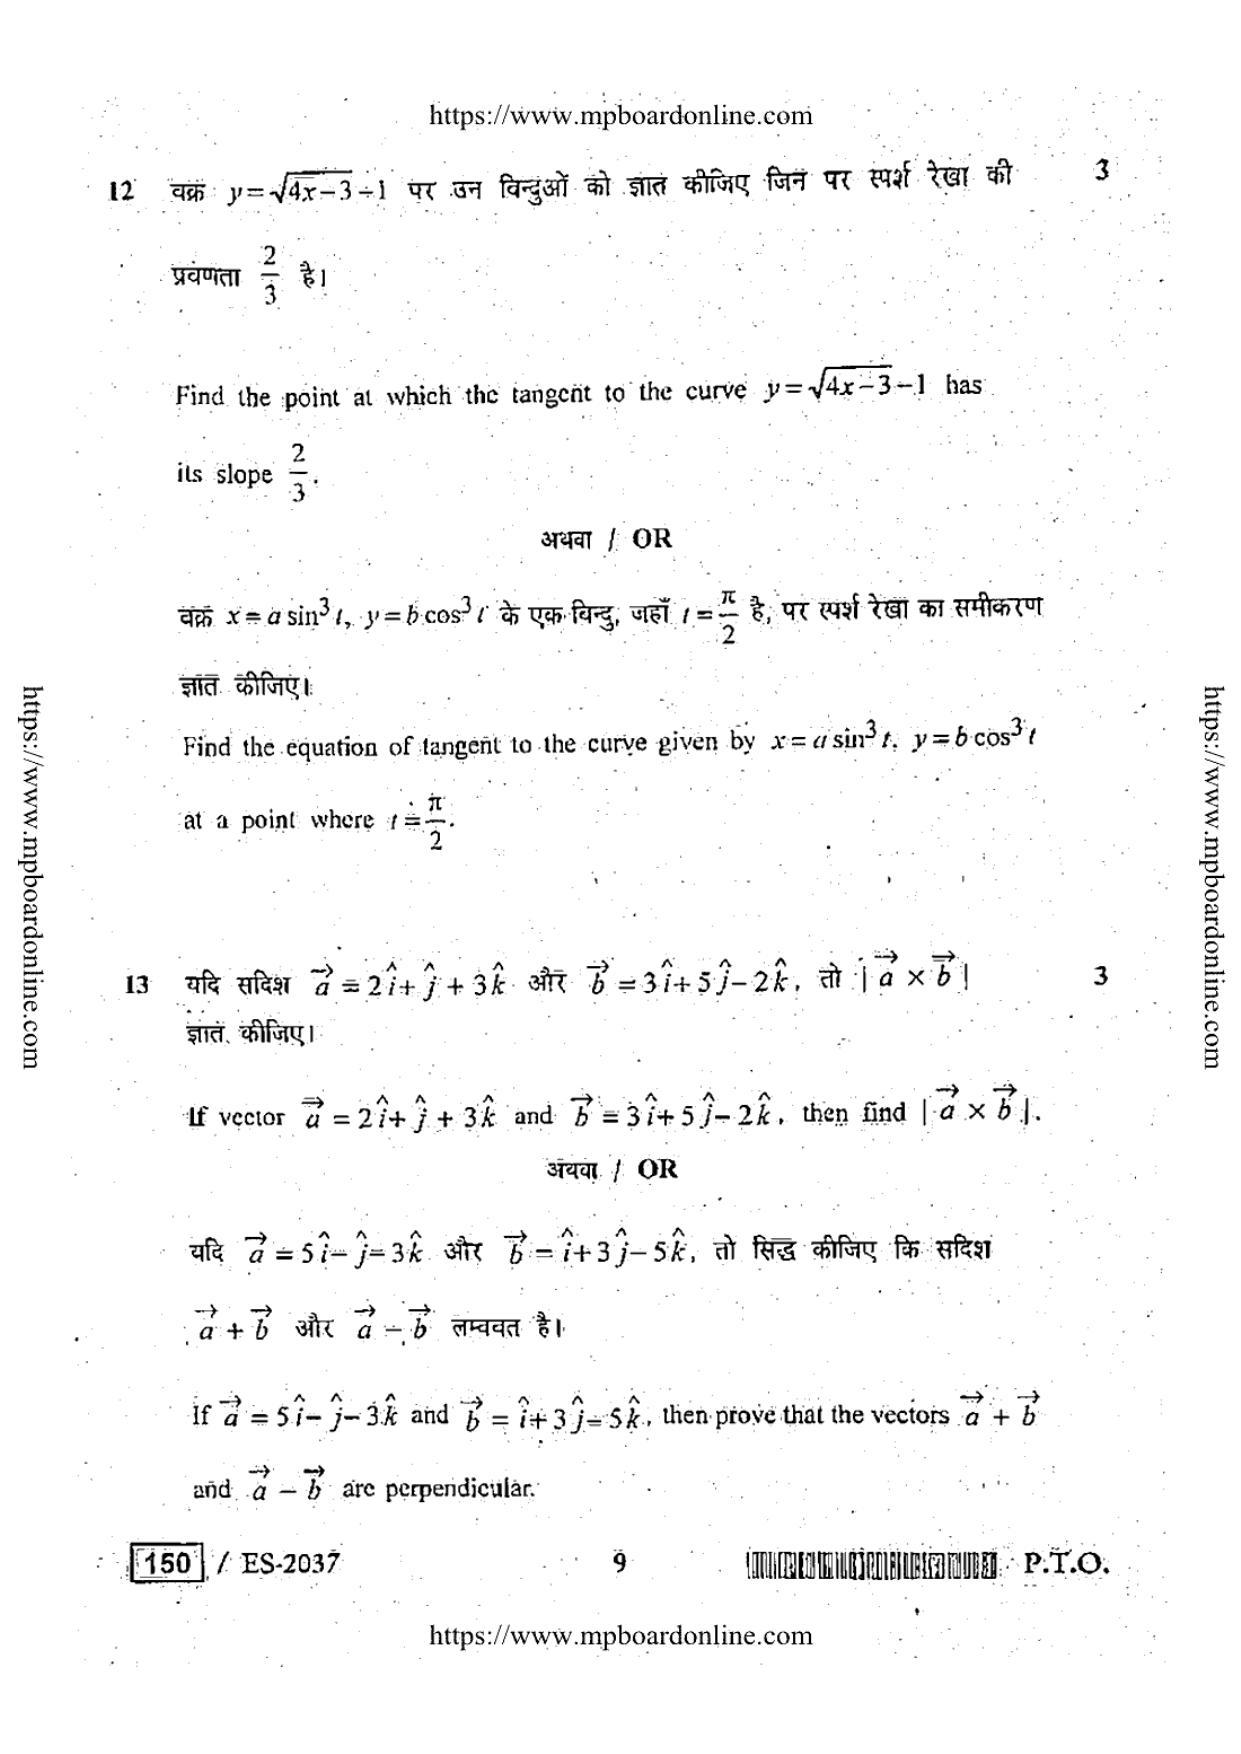 MP Board Class 12 Mathematica 2019 Question Paper - Page 8